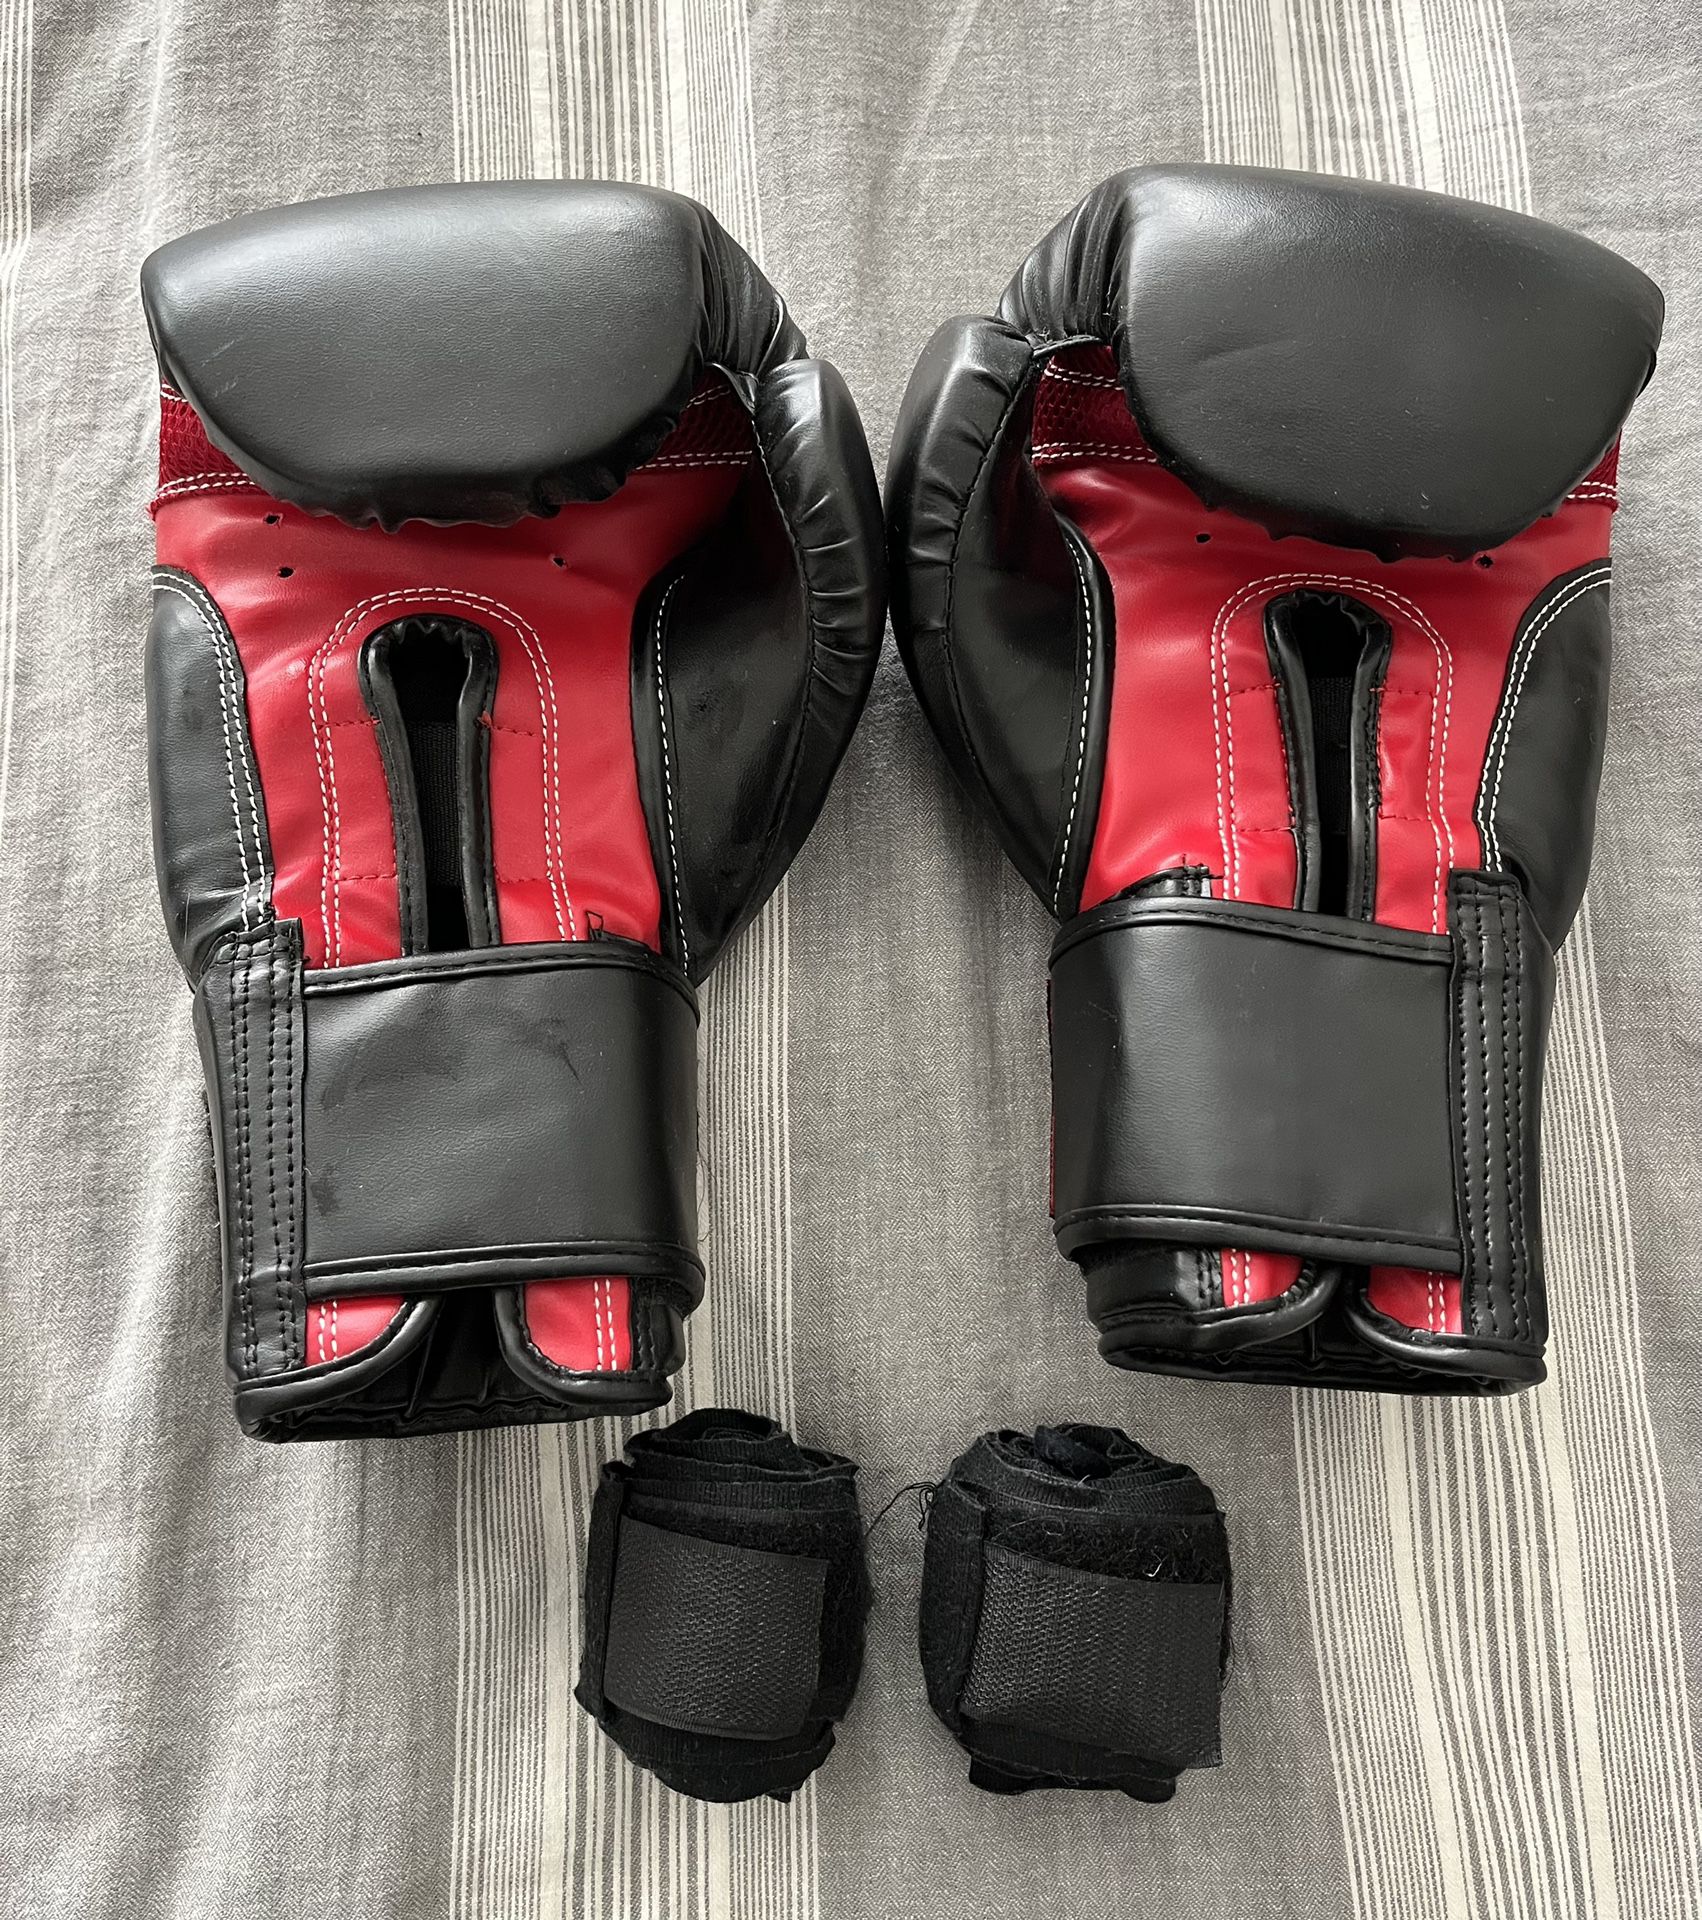 UFC Gym Boxing Gloves